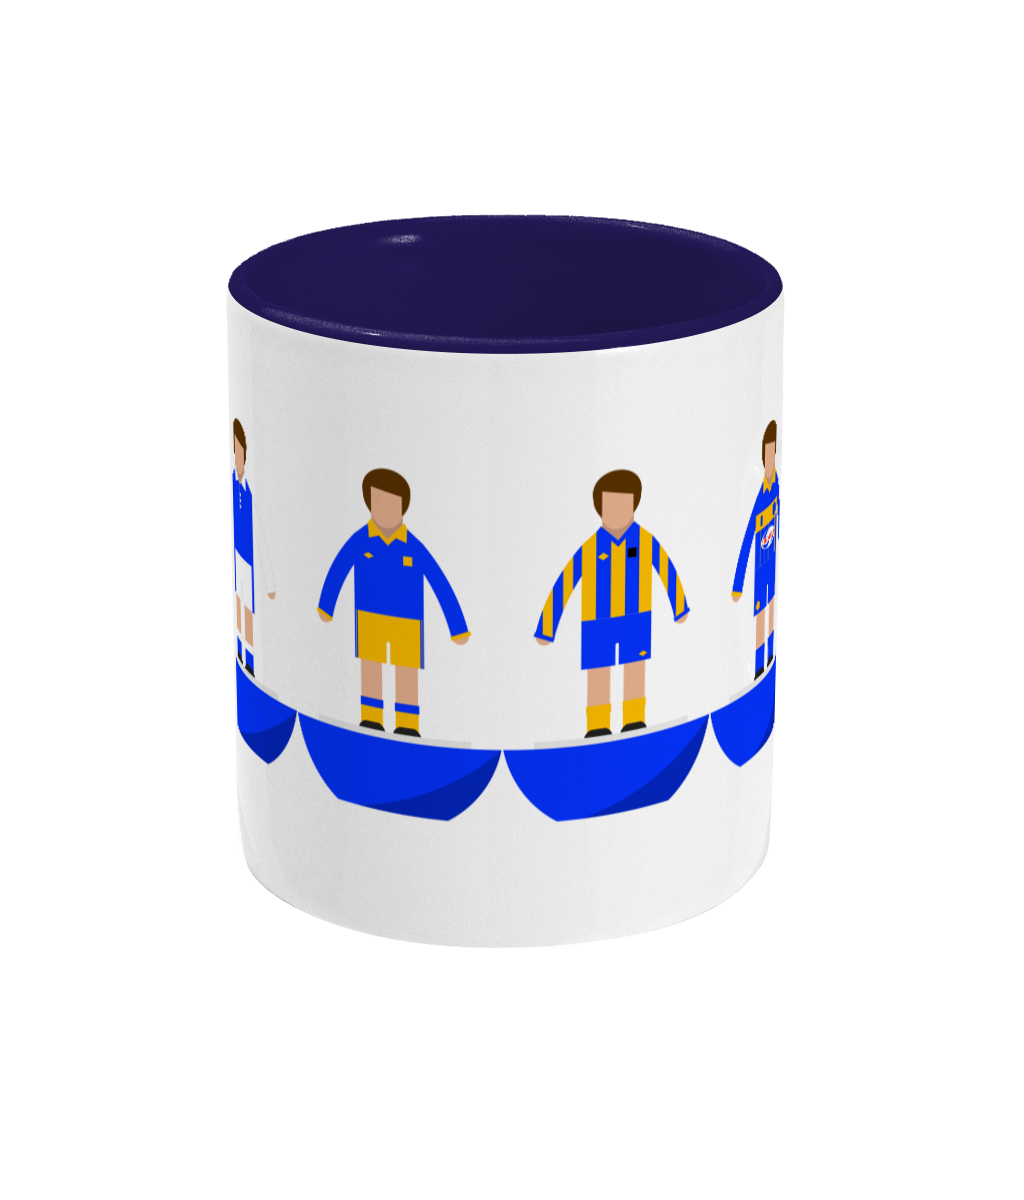 Football Kits 'Shrewsbury Town combined' Mug